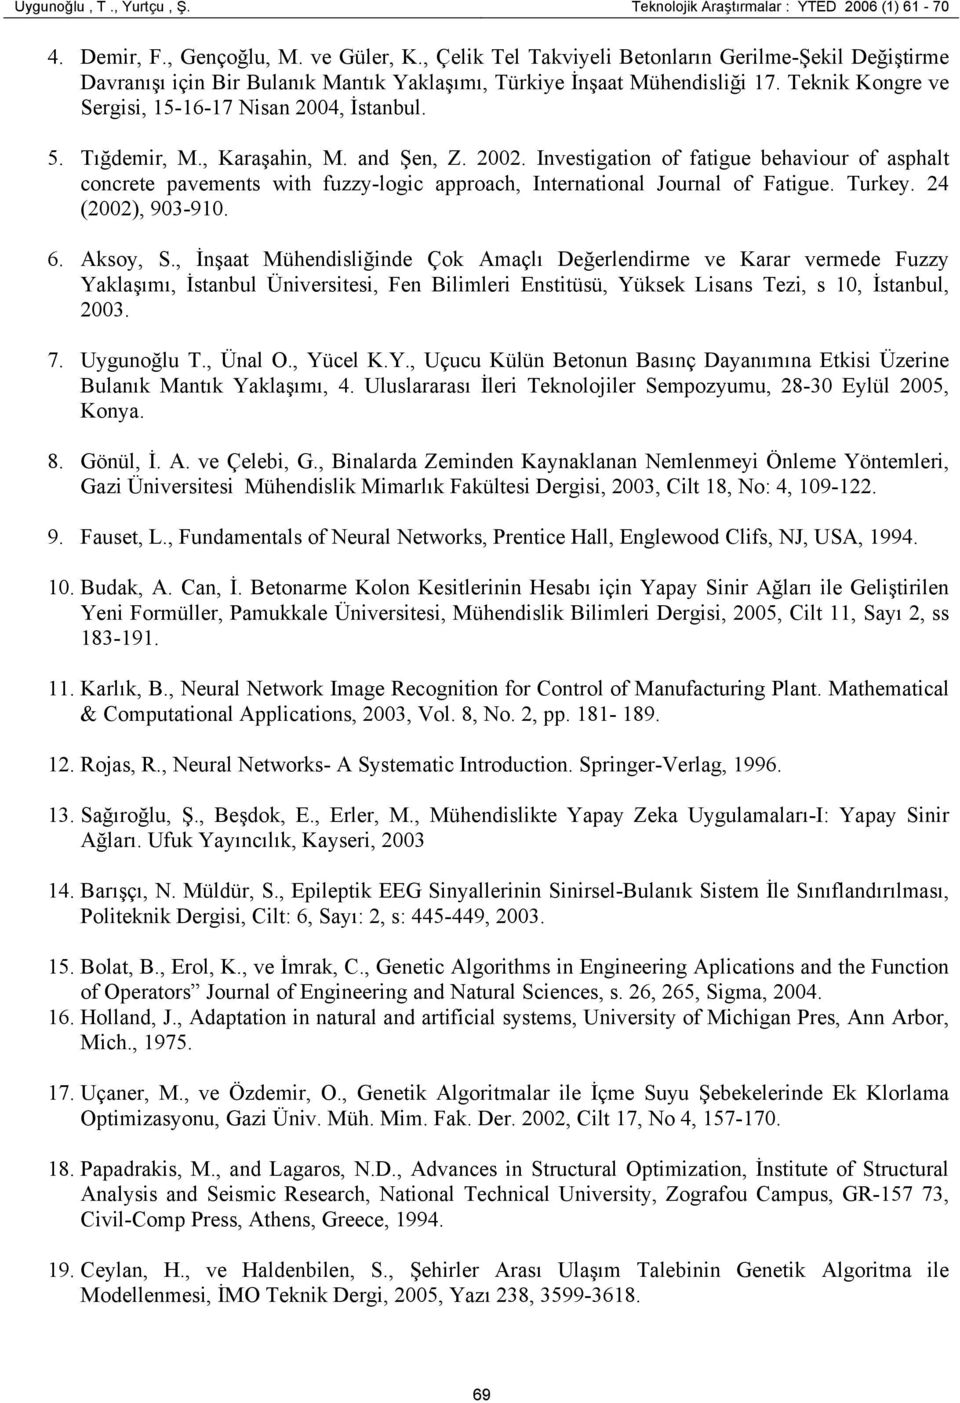 Tığdemir, M., Karaşahin, M. and Şen, Z. 2002. Investigation of fatigue behaviour of asphalt concrete pavements with fuzzy-logic approach, International Journal of Fatigue. Turkey. 24 (2002), 903-910.